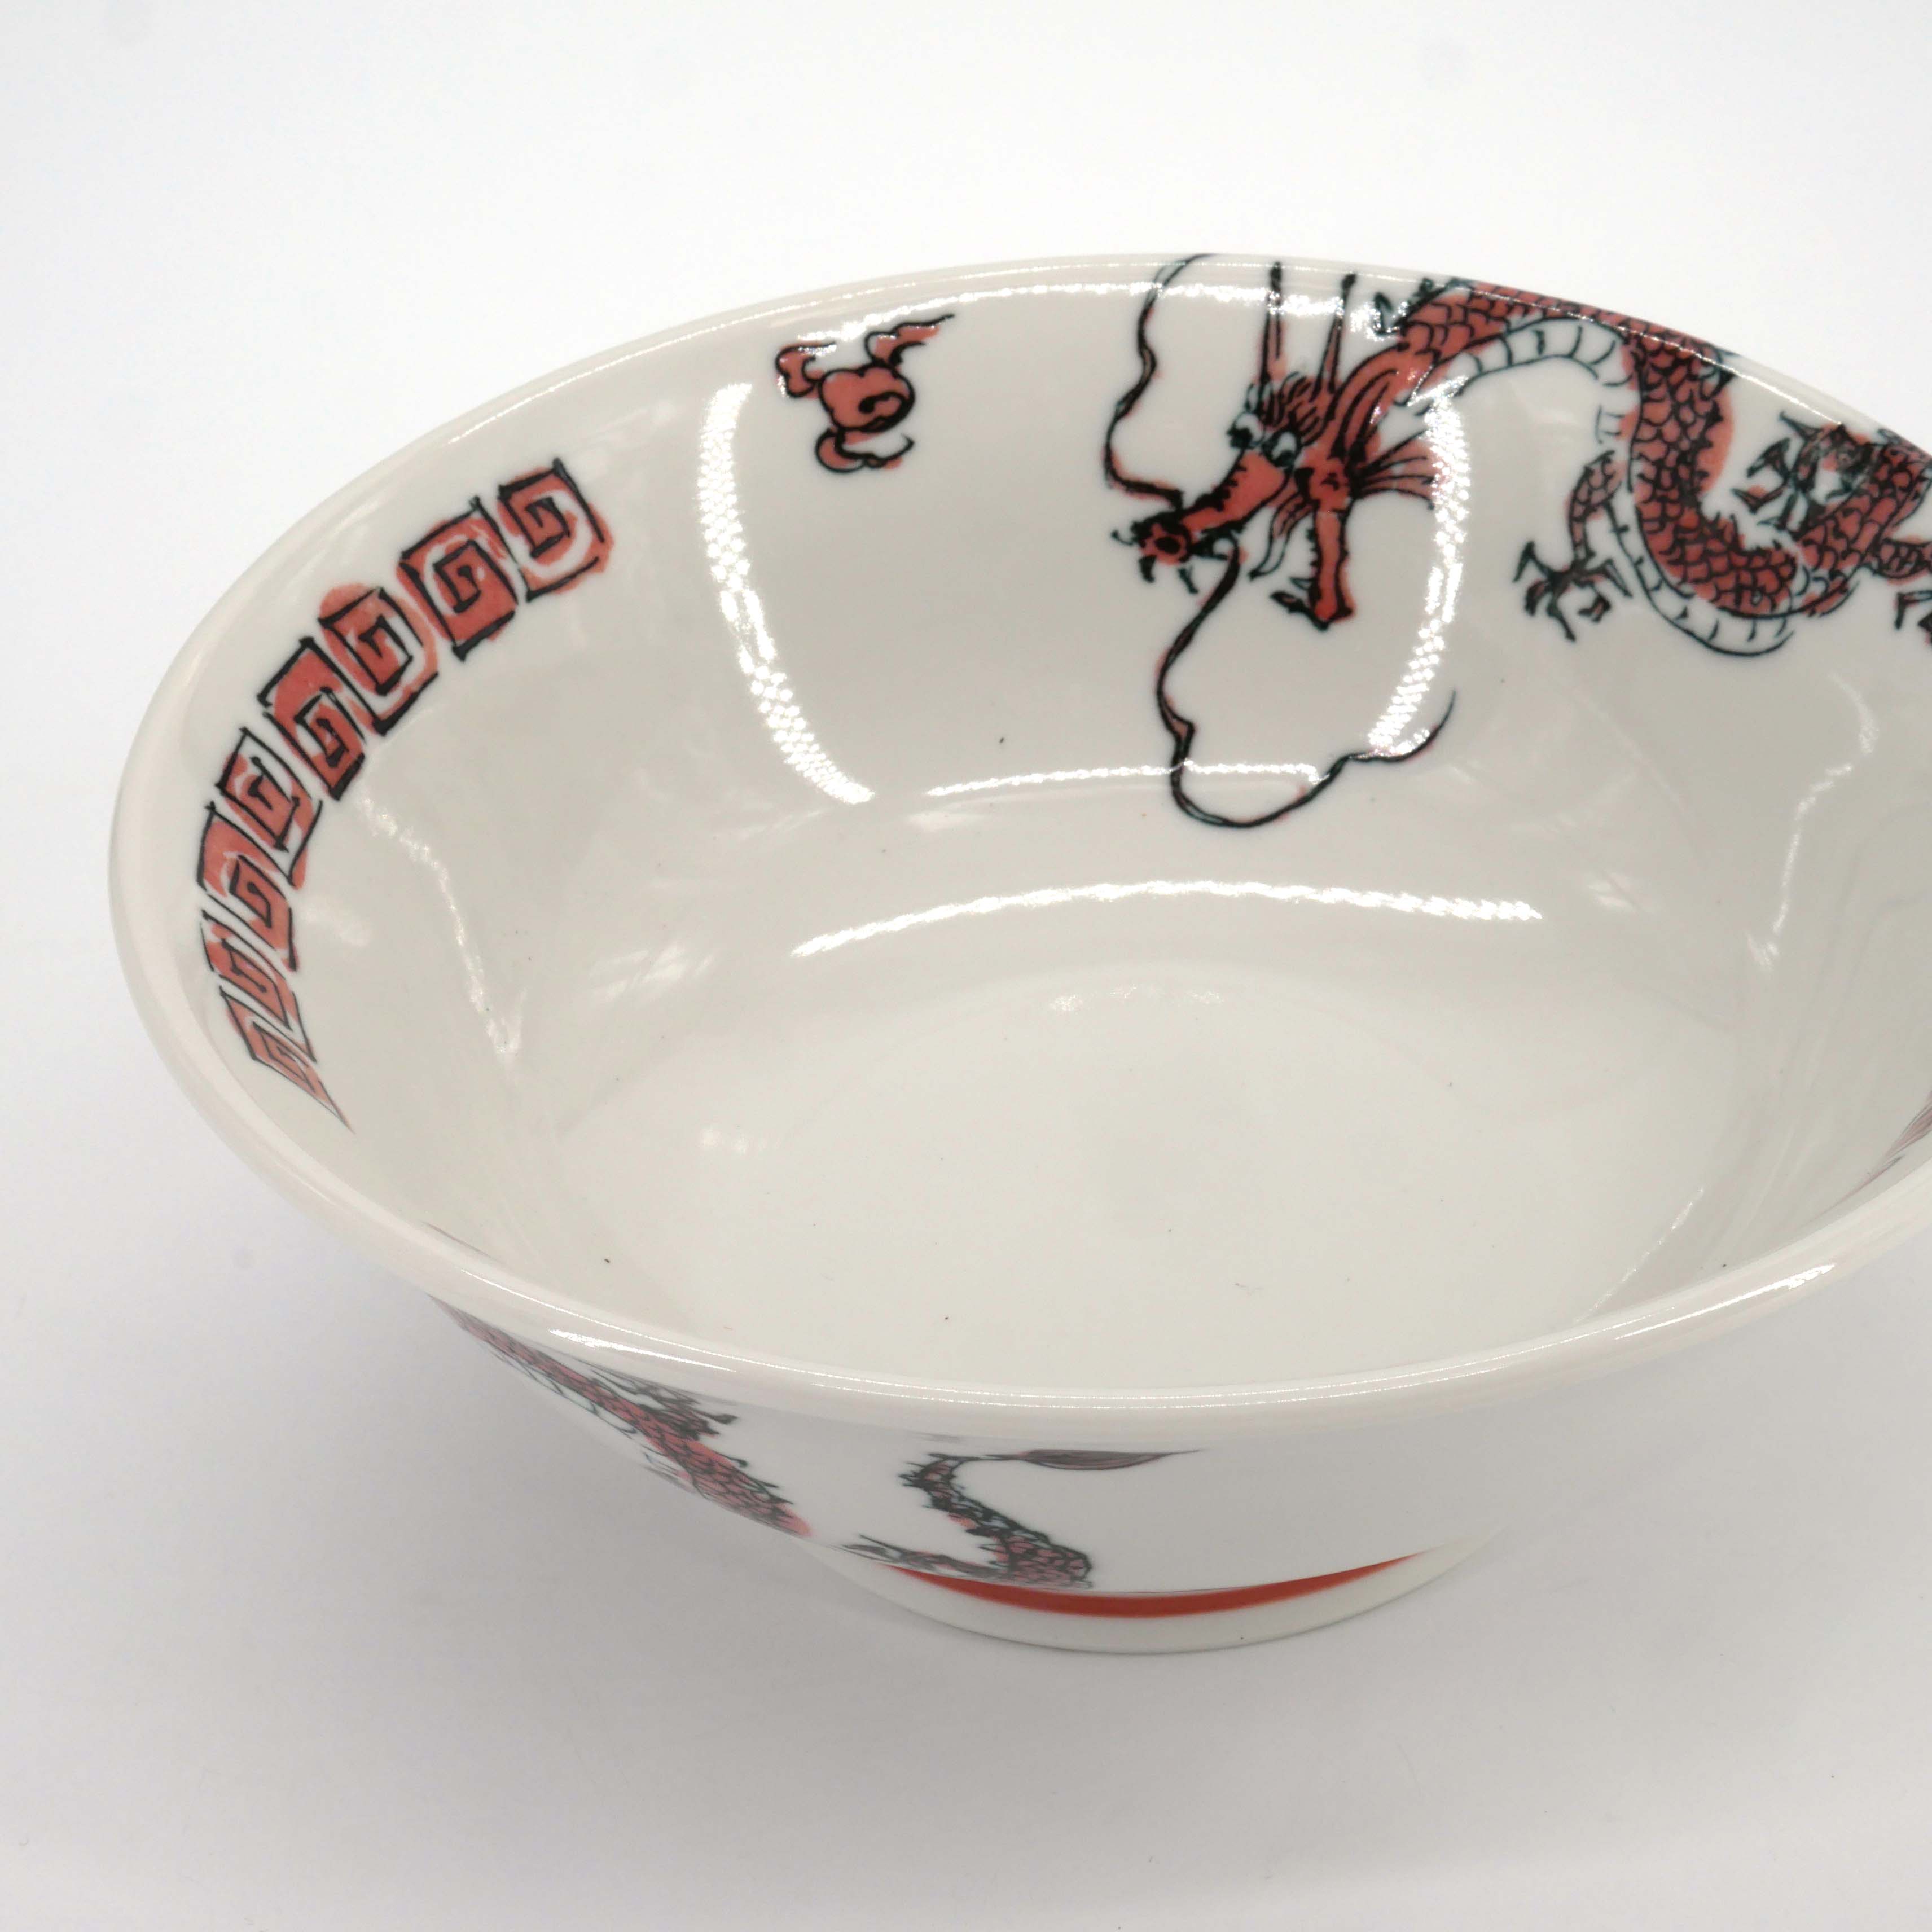 Ciotola ramen in ceramica giapponese Ø20cm RYU, rossa